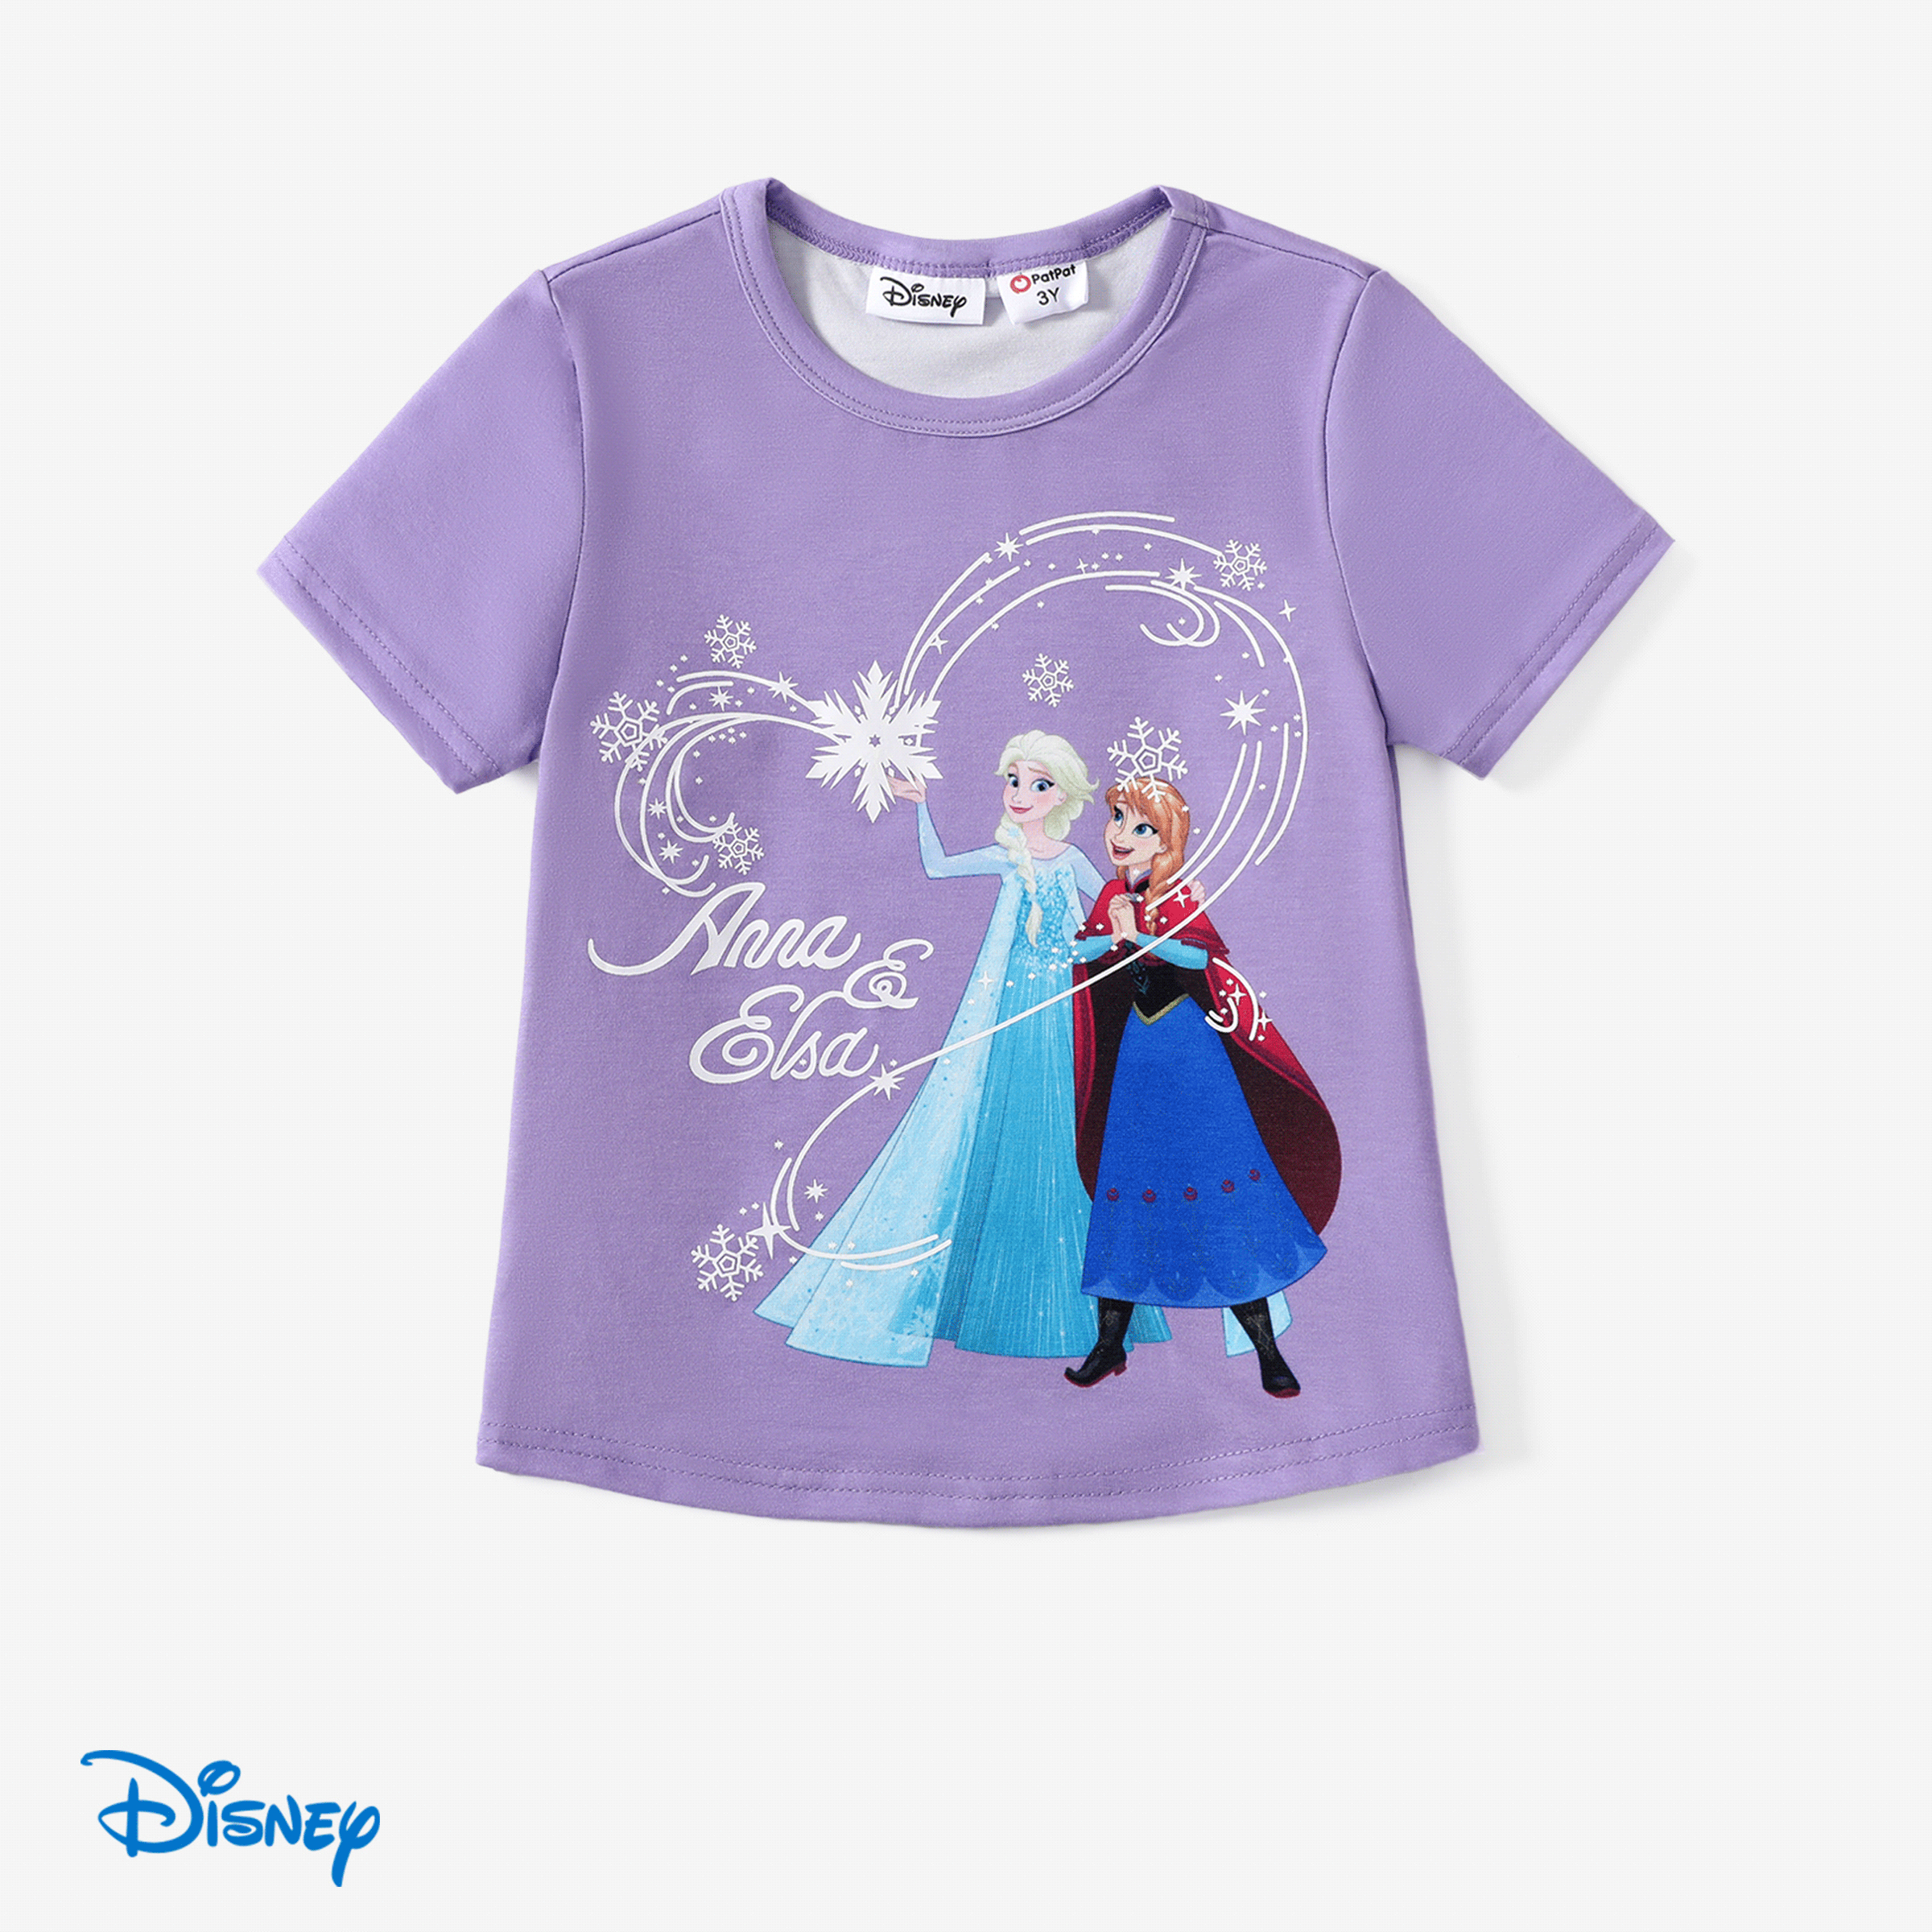 

Disney Frozen Toddler Girls Anna/Elsa 1pc Glow in the Dark Magical Snowflake Print T-shirt